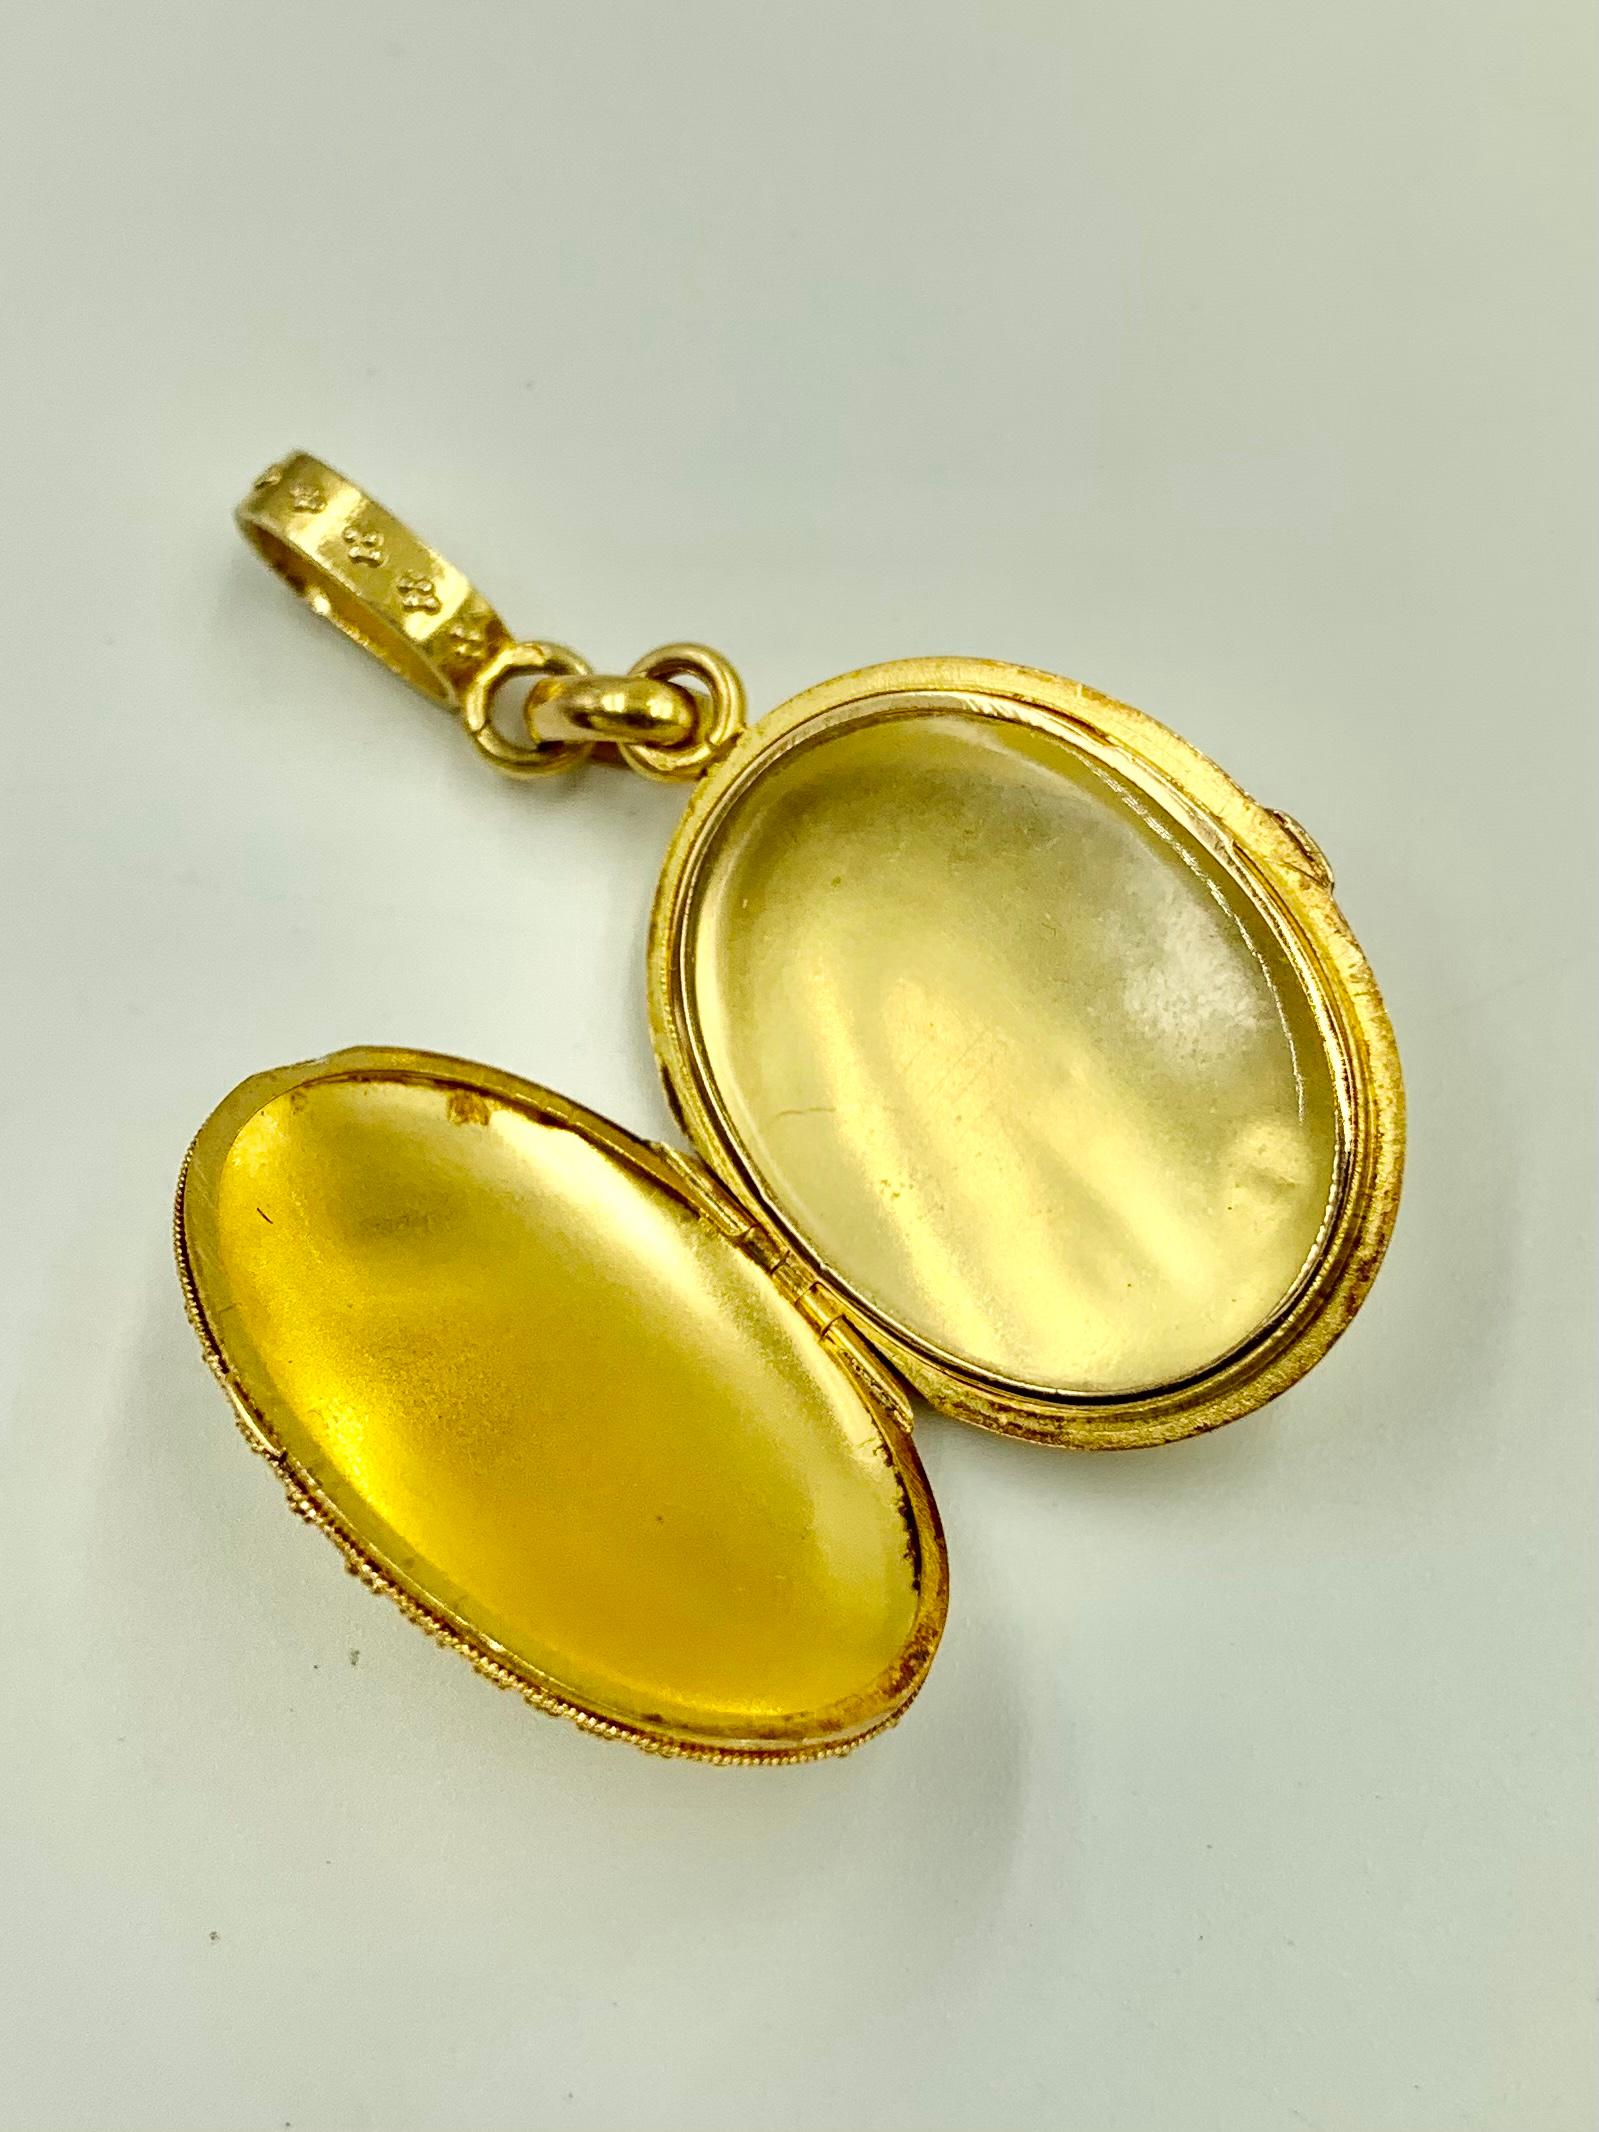 Rare Etruscan Revival 18K Gold Locket Necklace attr. Eugene Fontenay, Paris 1870 For Sale 1